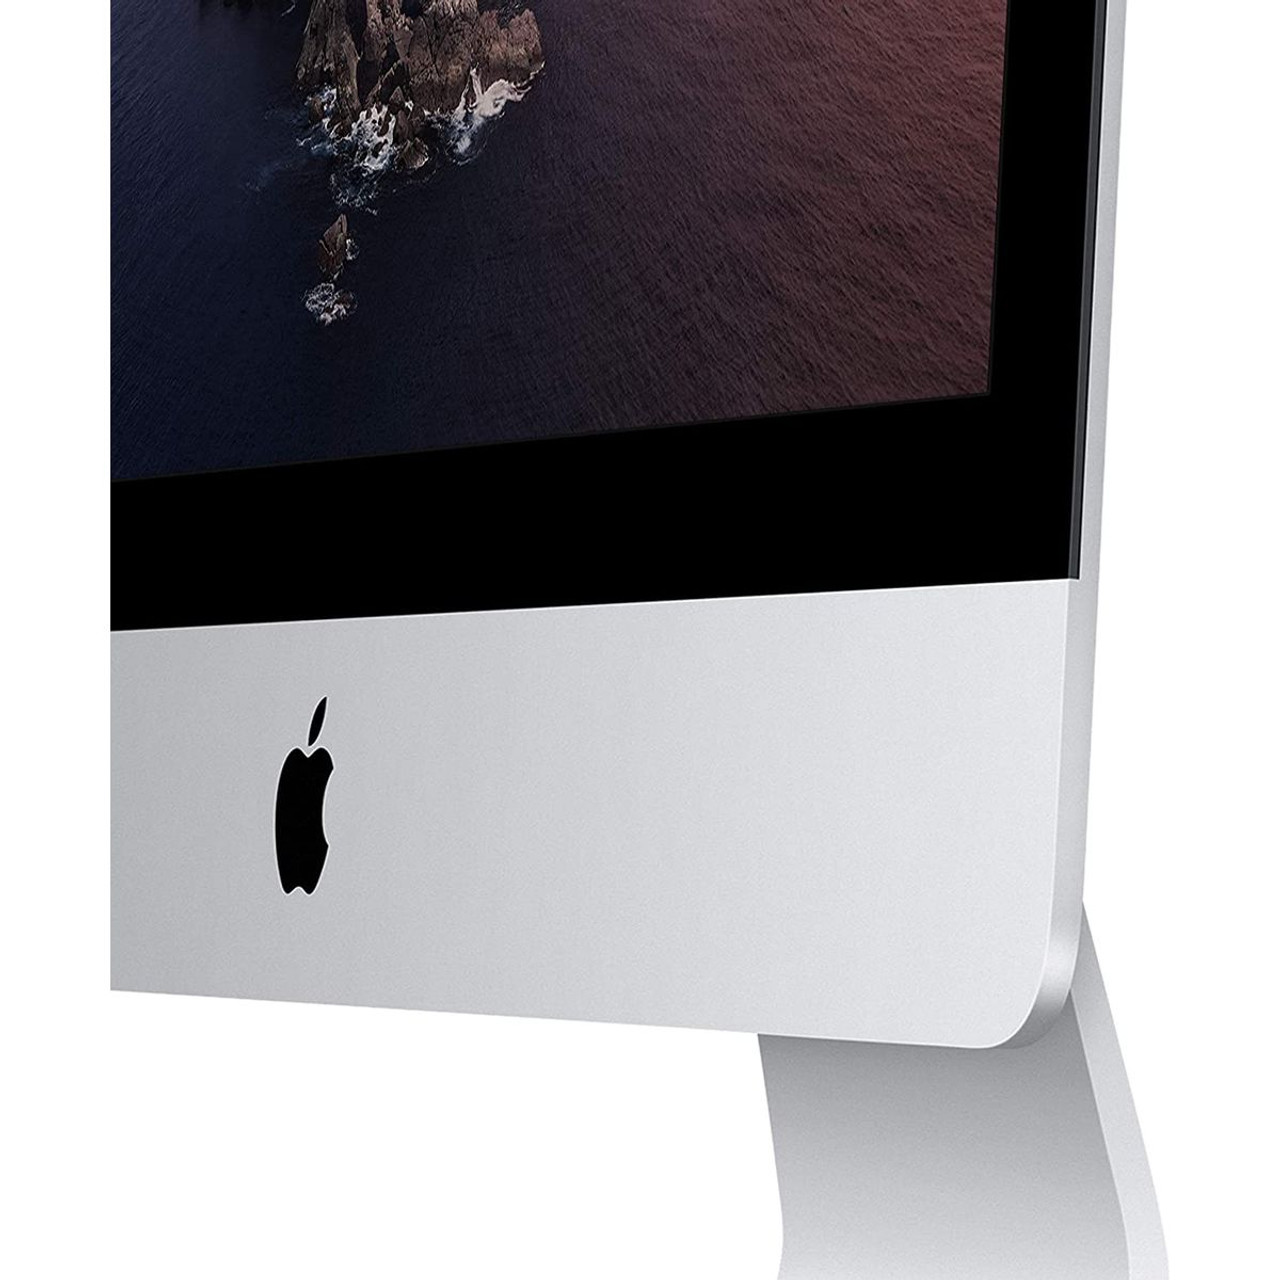 Apple iMac 21.5-inch (Broken/Defective) product image